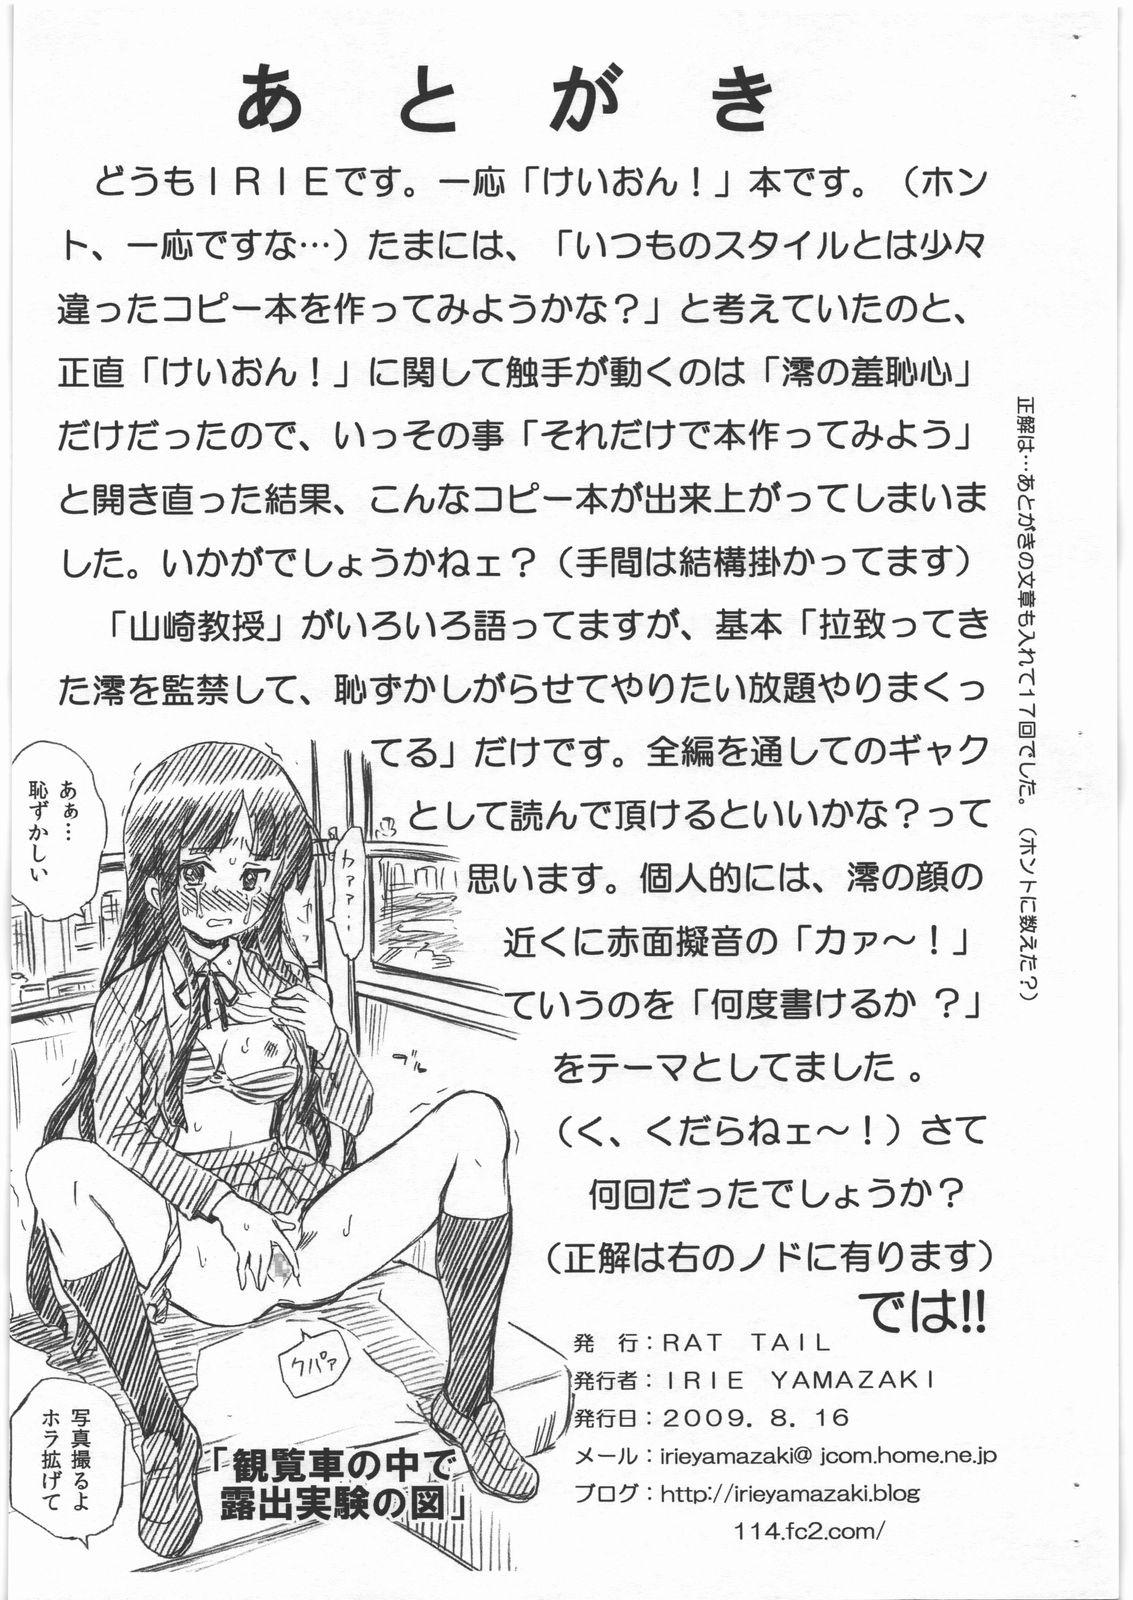 Realsex Yamazaki Kyouju no Shuuchishin Kenkyuujo Model "K-ON!" Akiyama Mio - K on Topless - Page 9